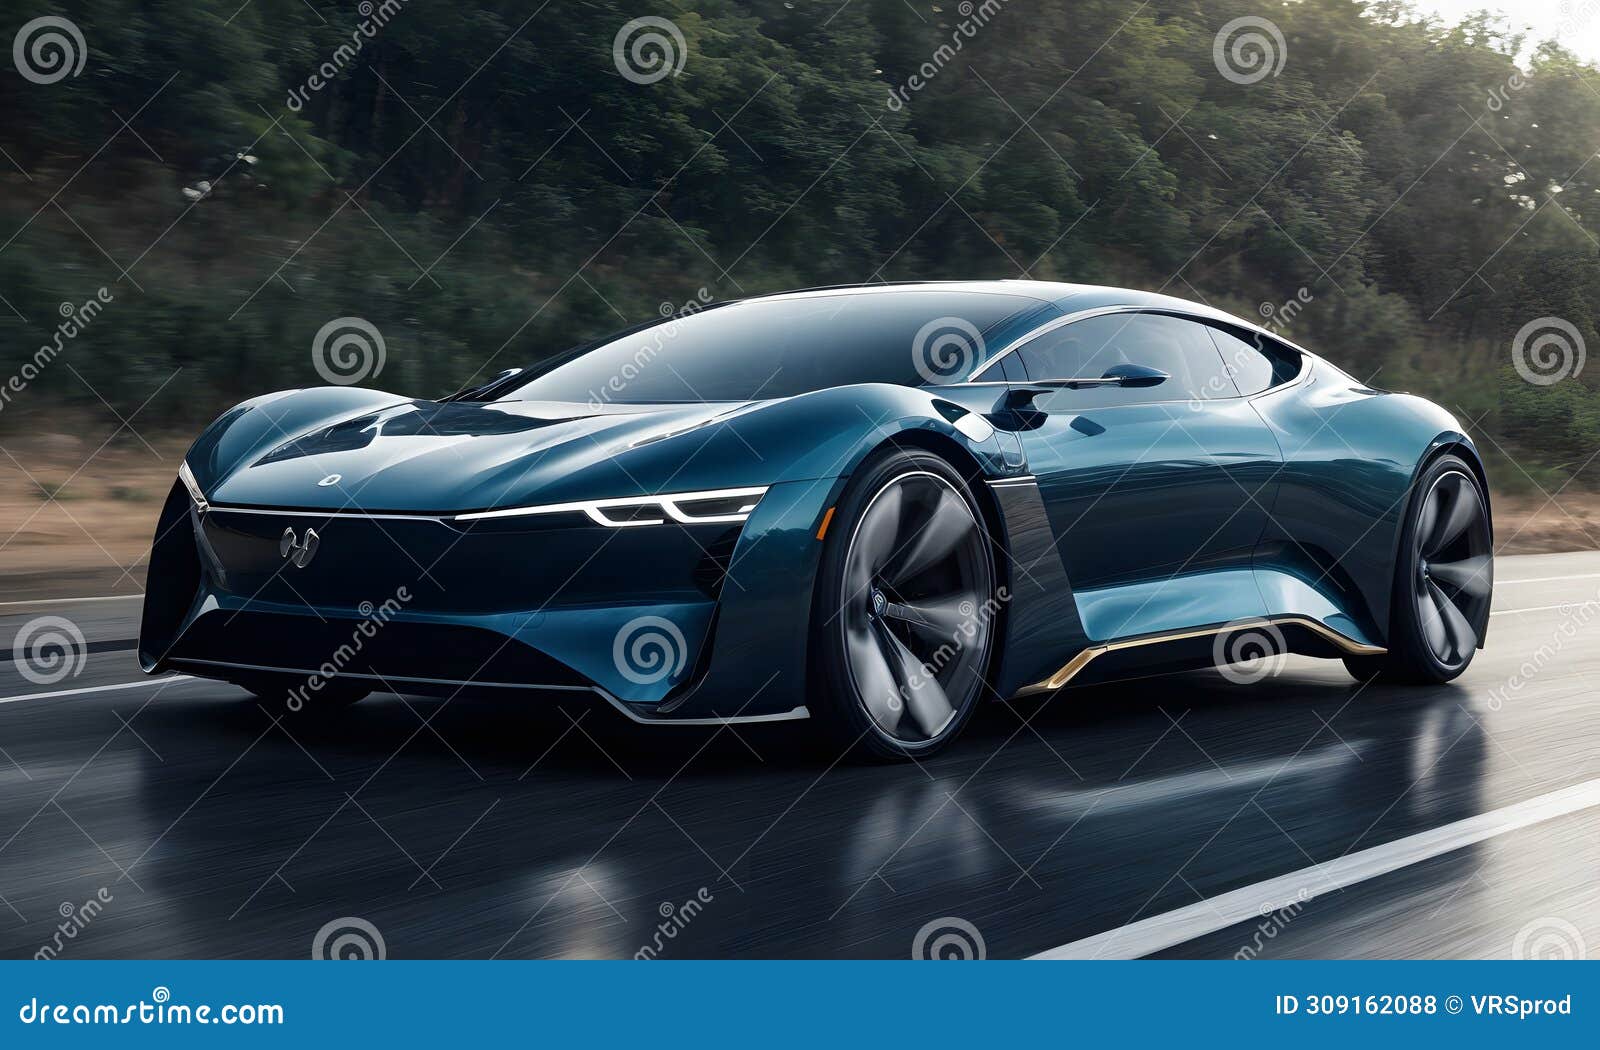 aerodynamic electric sports car on the move